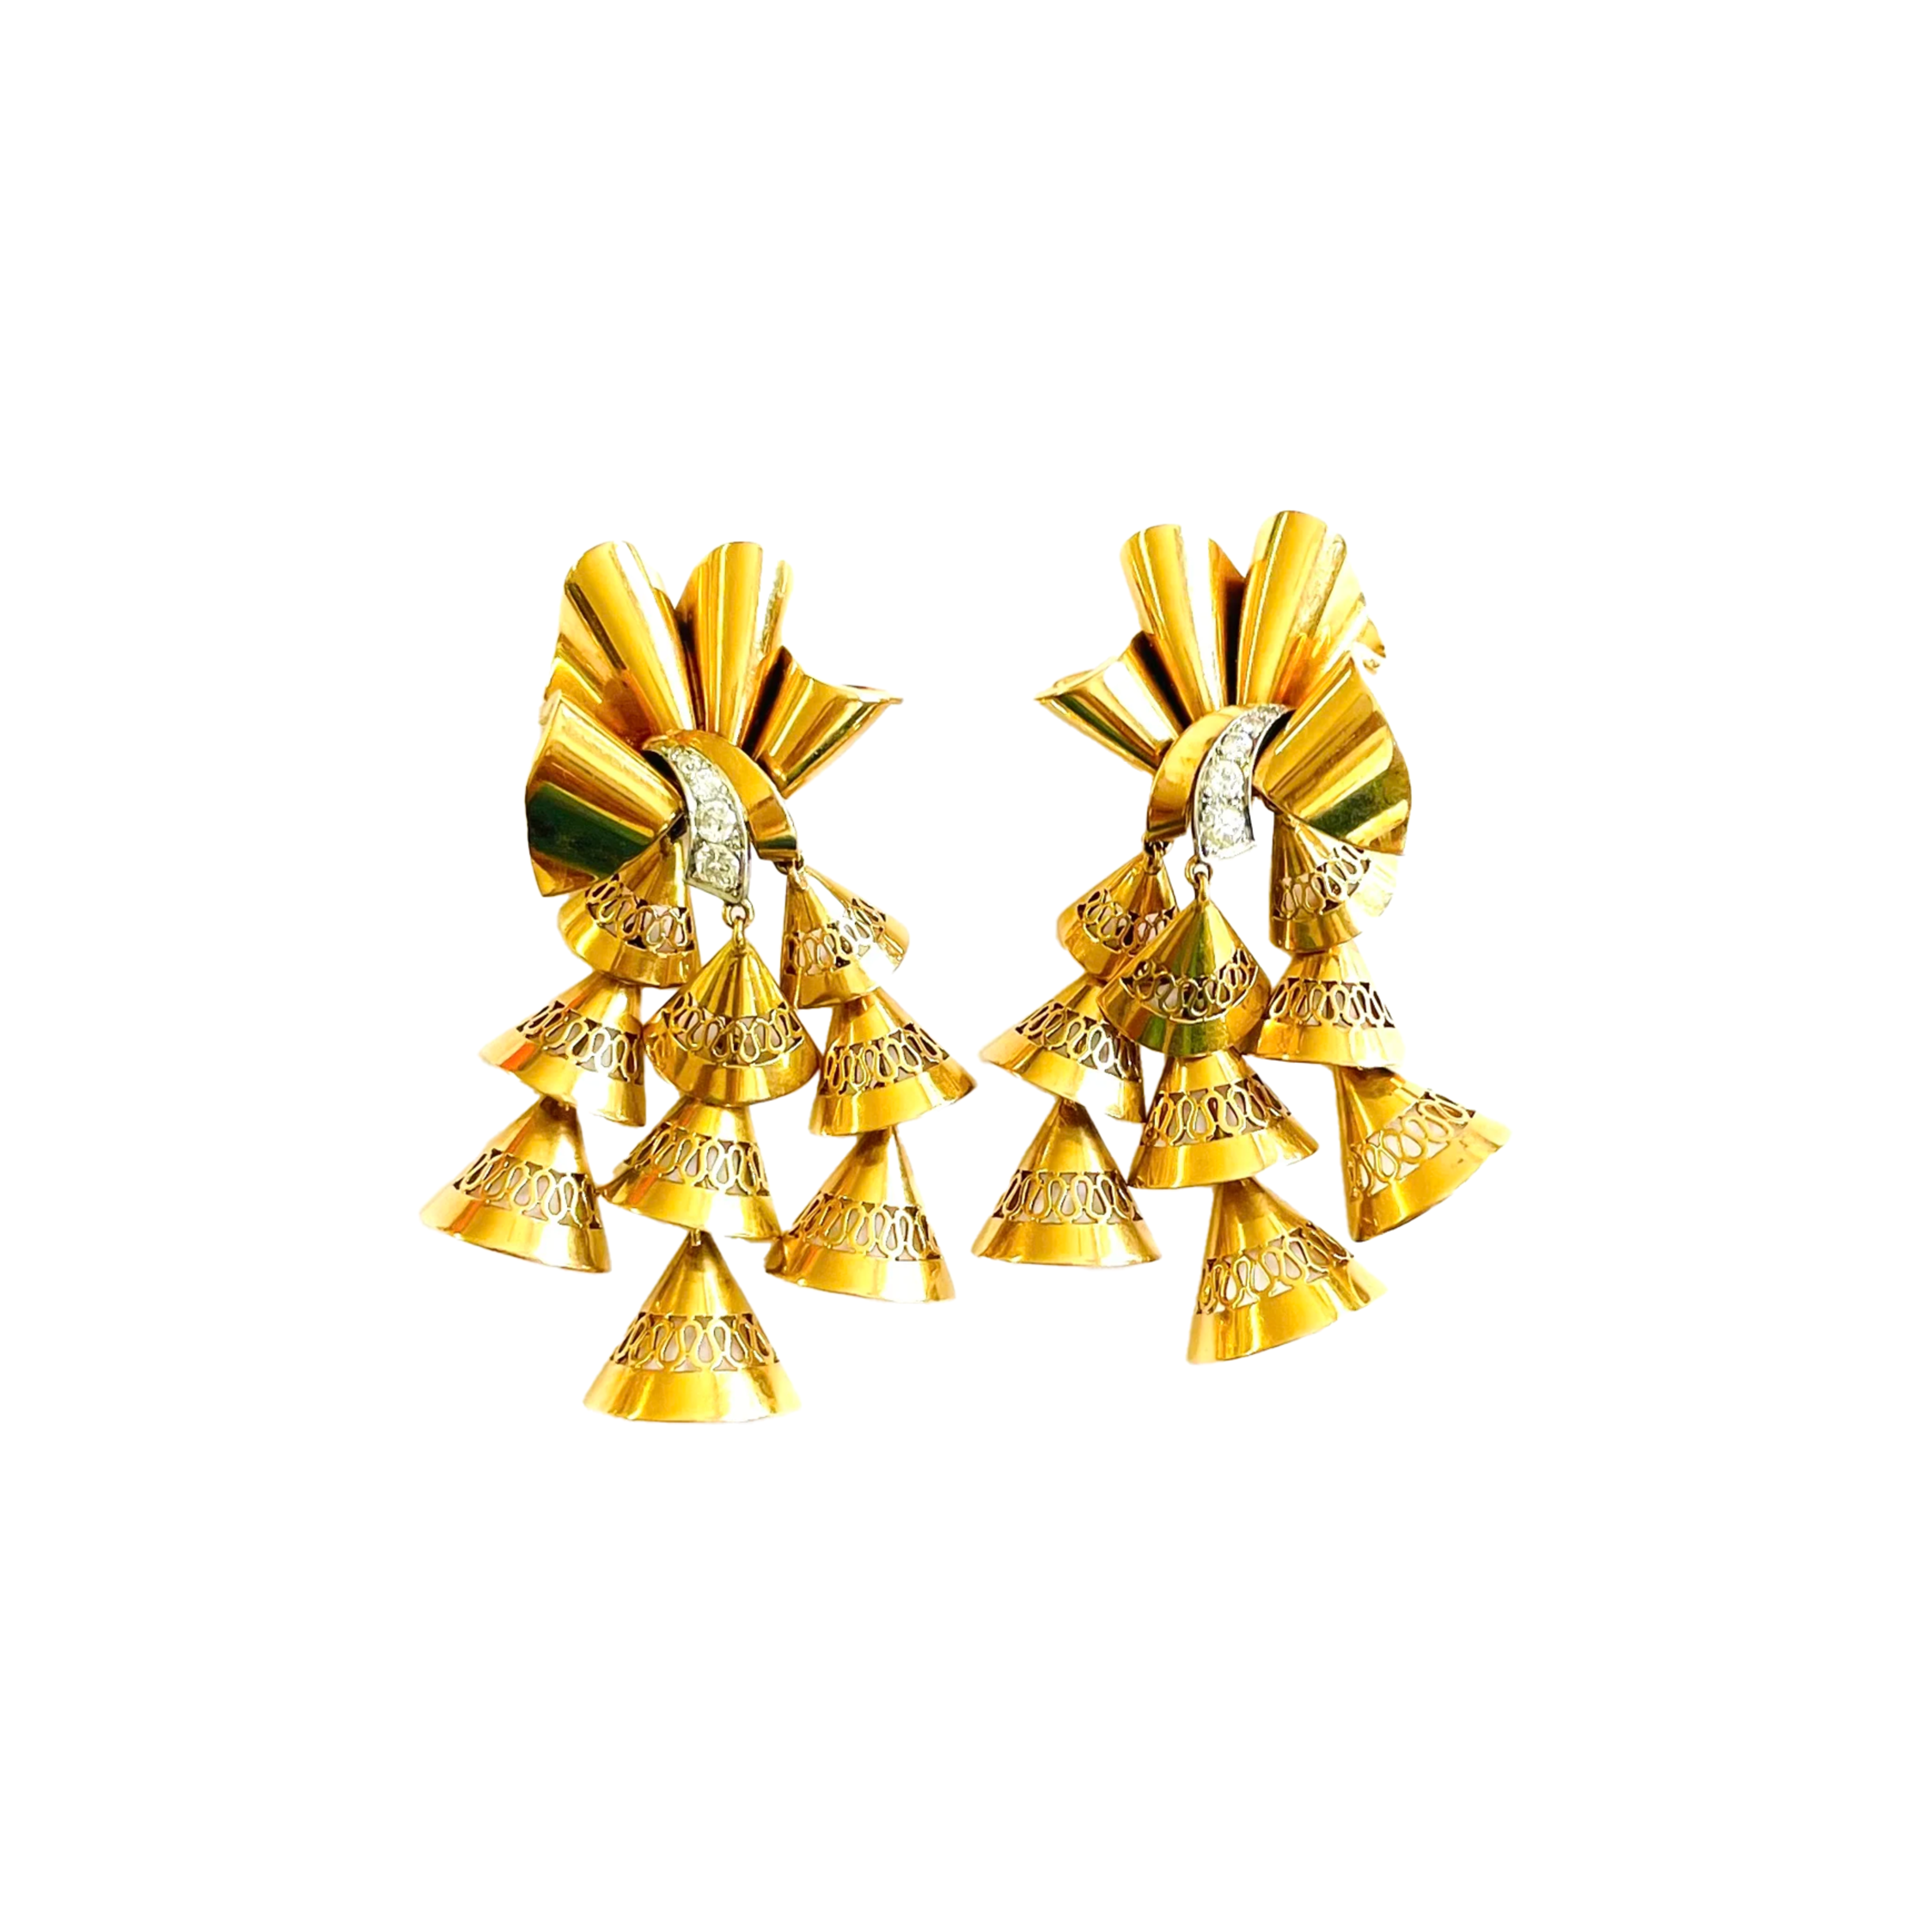 Paris Regner French 1950s 18KT Yellow Gold Diamond Earrings